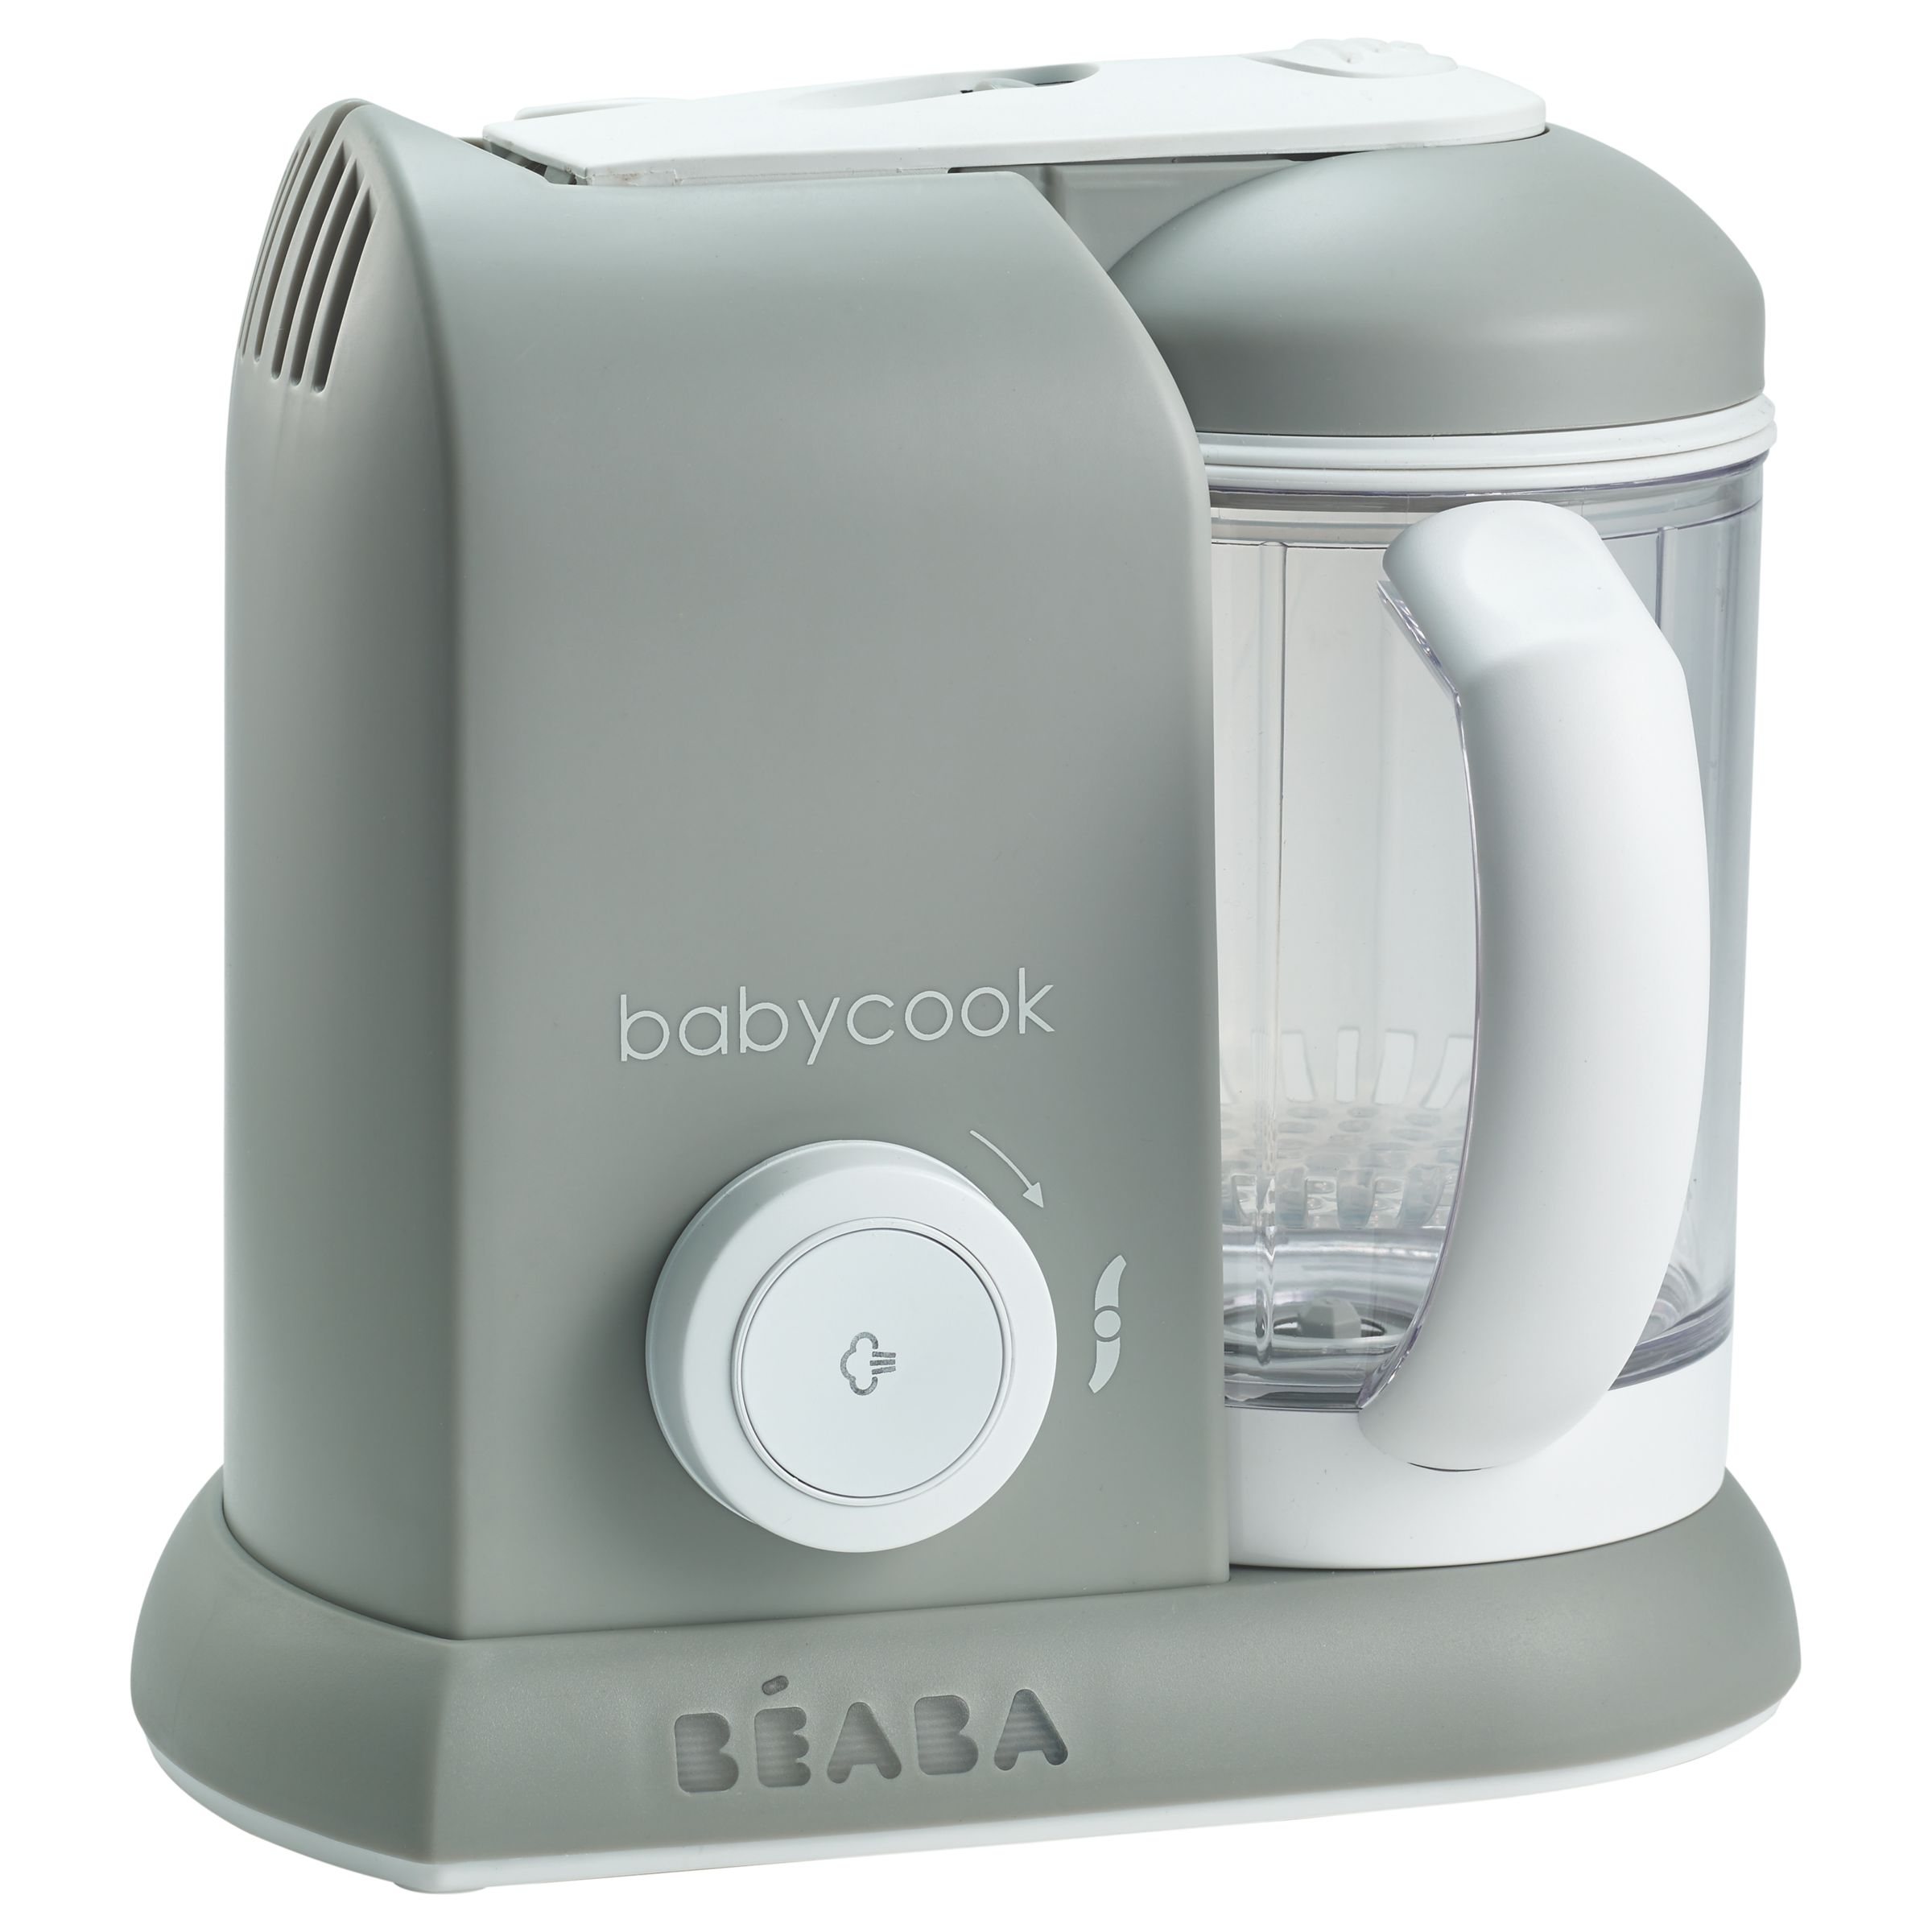 Beaba Babycook Food Processor, Grey